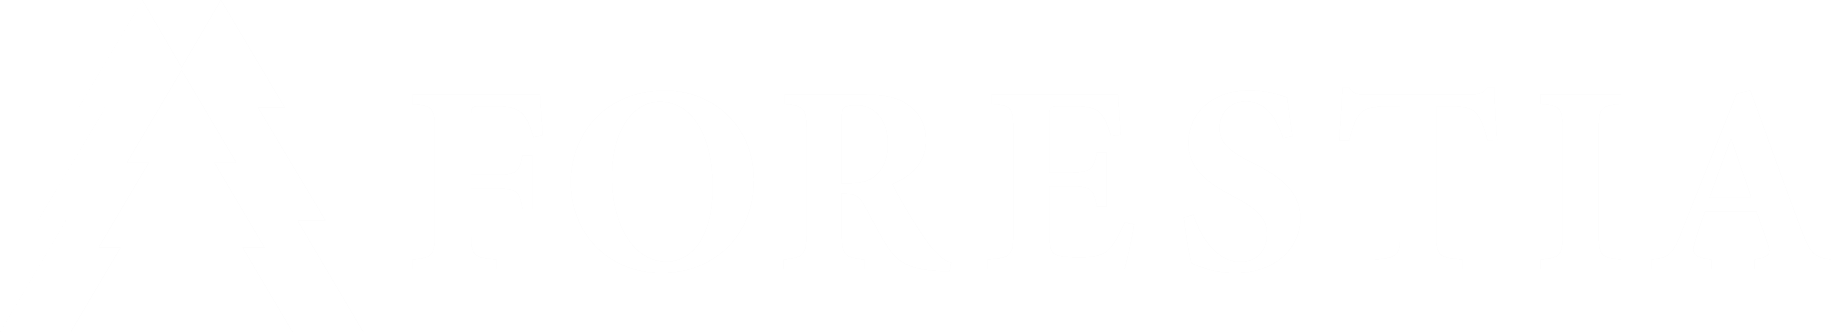 Forestia logo hvit PNG